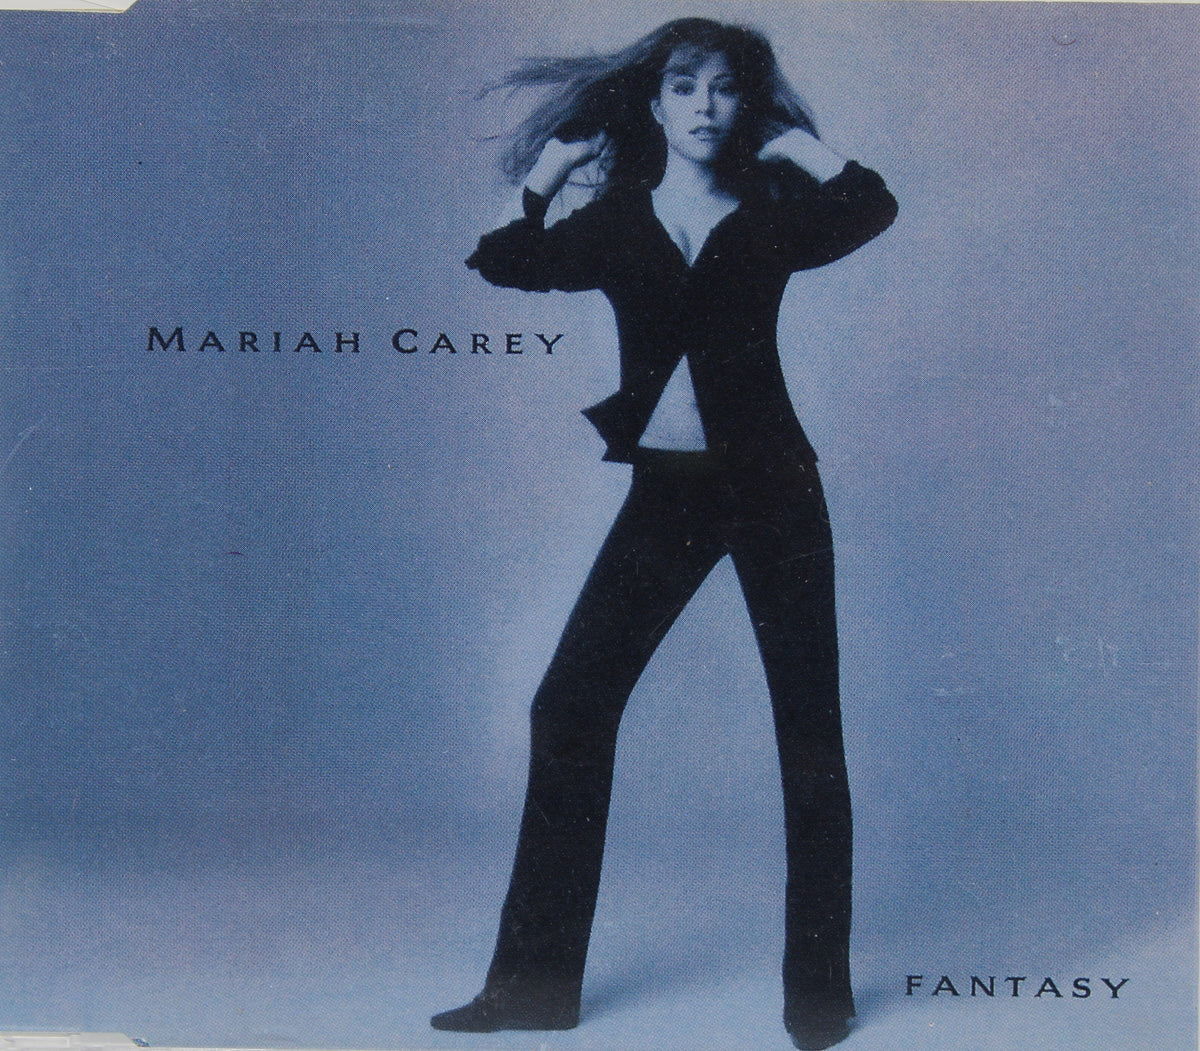 Mariah Carey ‎– Fantasy, CD Single, South Africa 1995